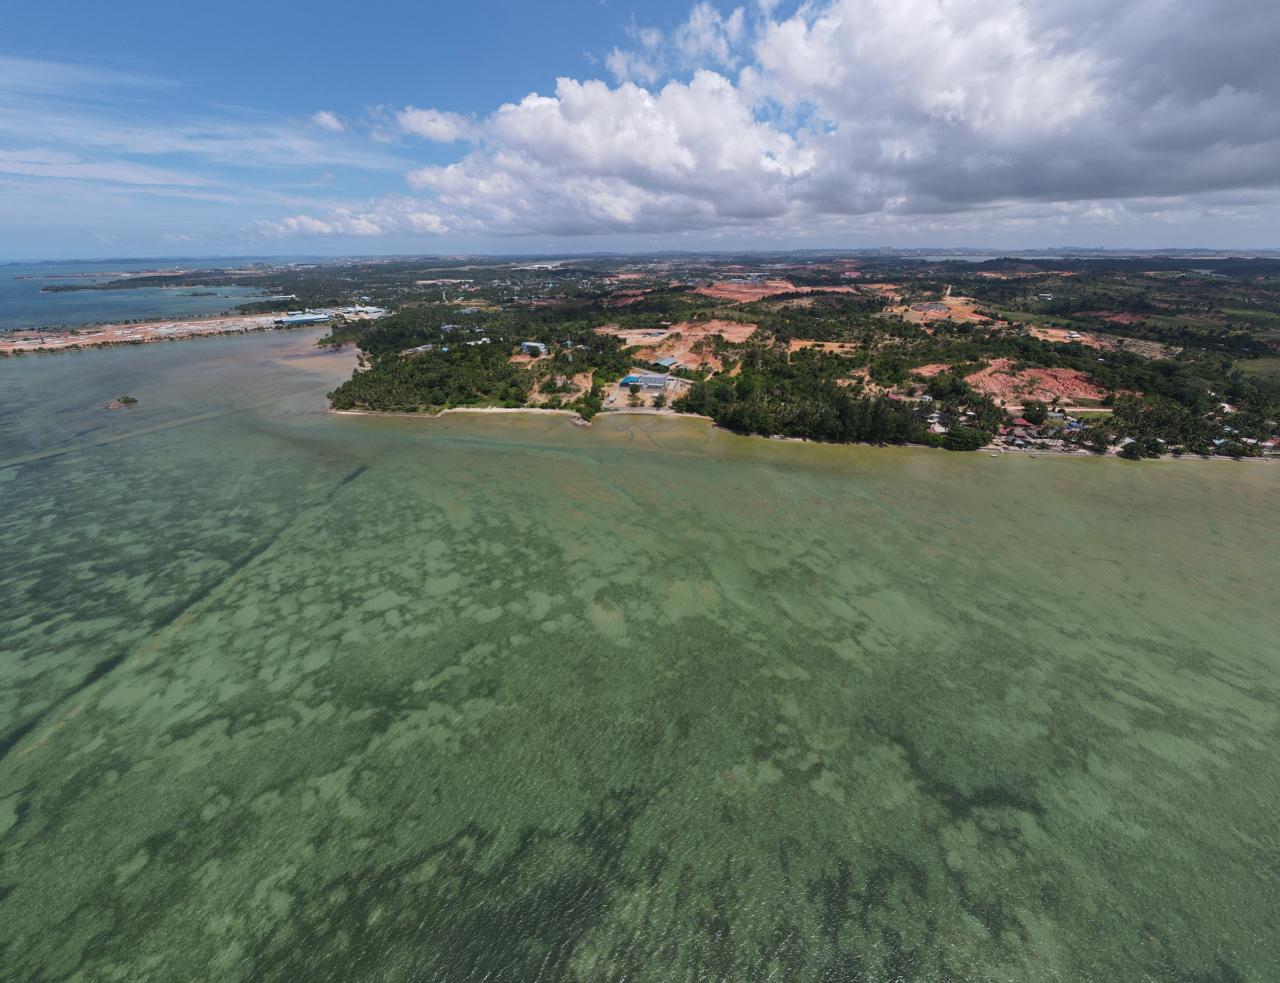 Dari lokasi penyegelan reklamasi, Menteri Trenggono menuju Tanjung Bemban di Kecamatan Nongsa, melihat ceceran material limbah yang mencemari perairan pantai